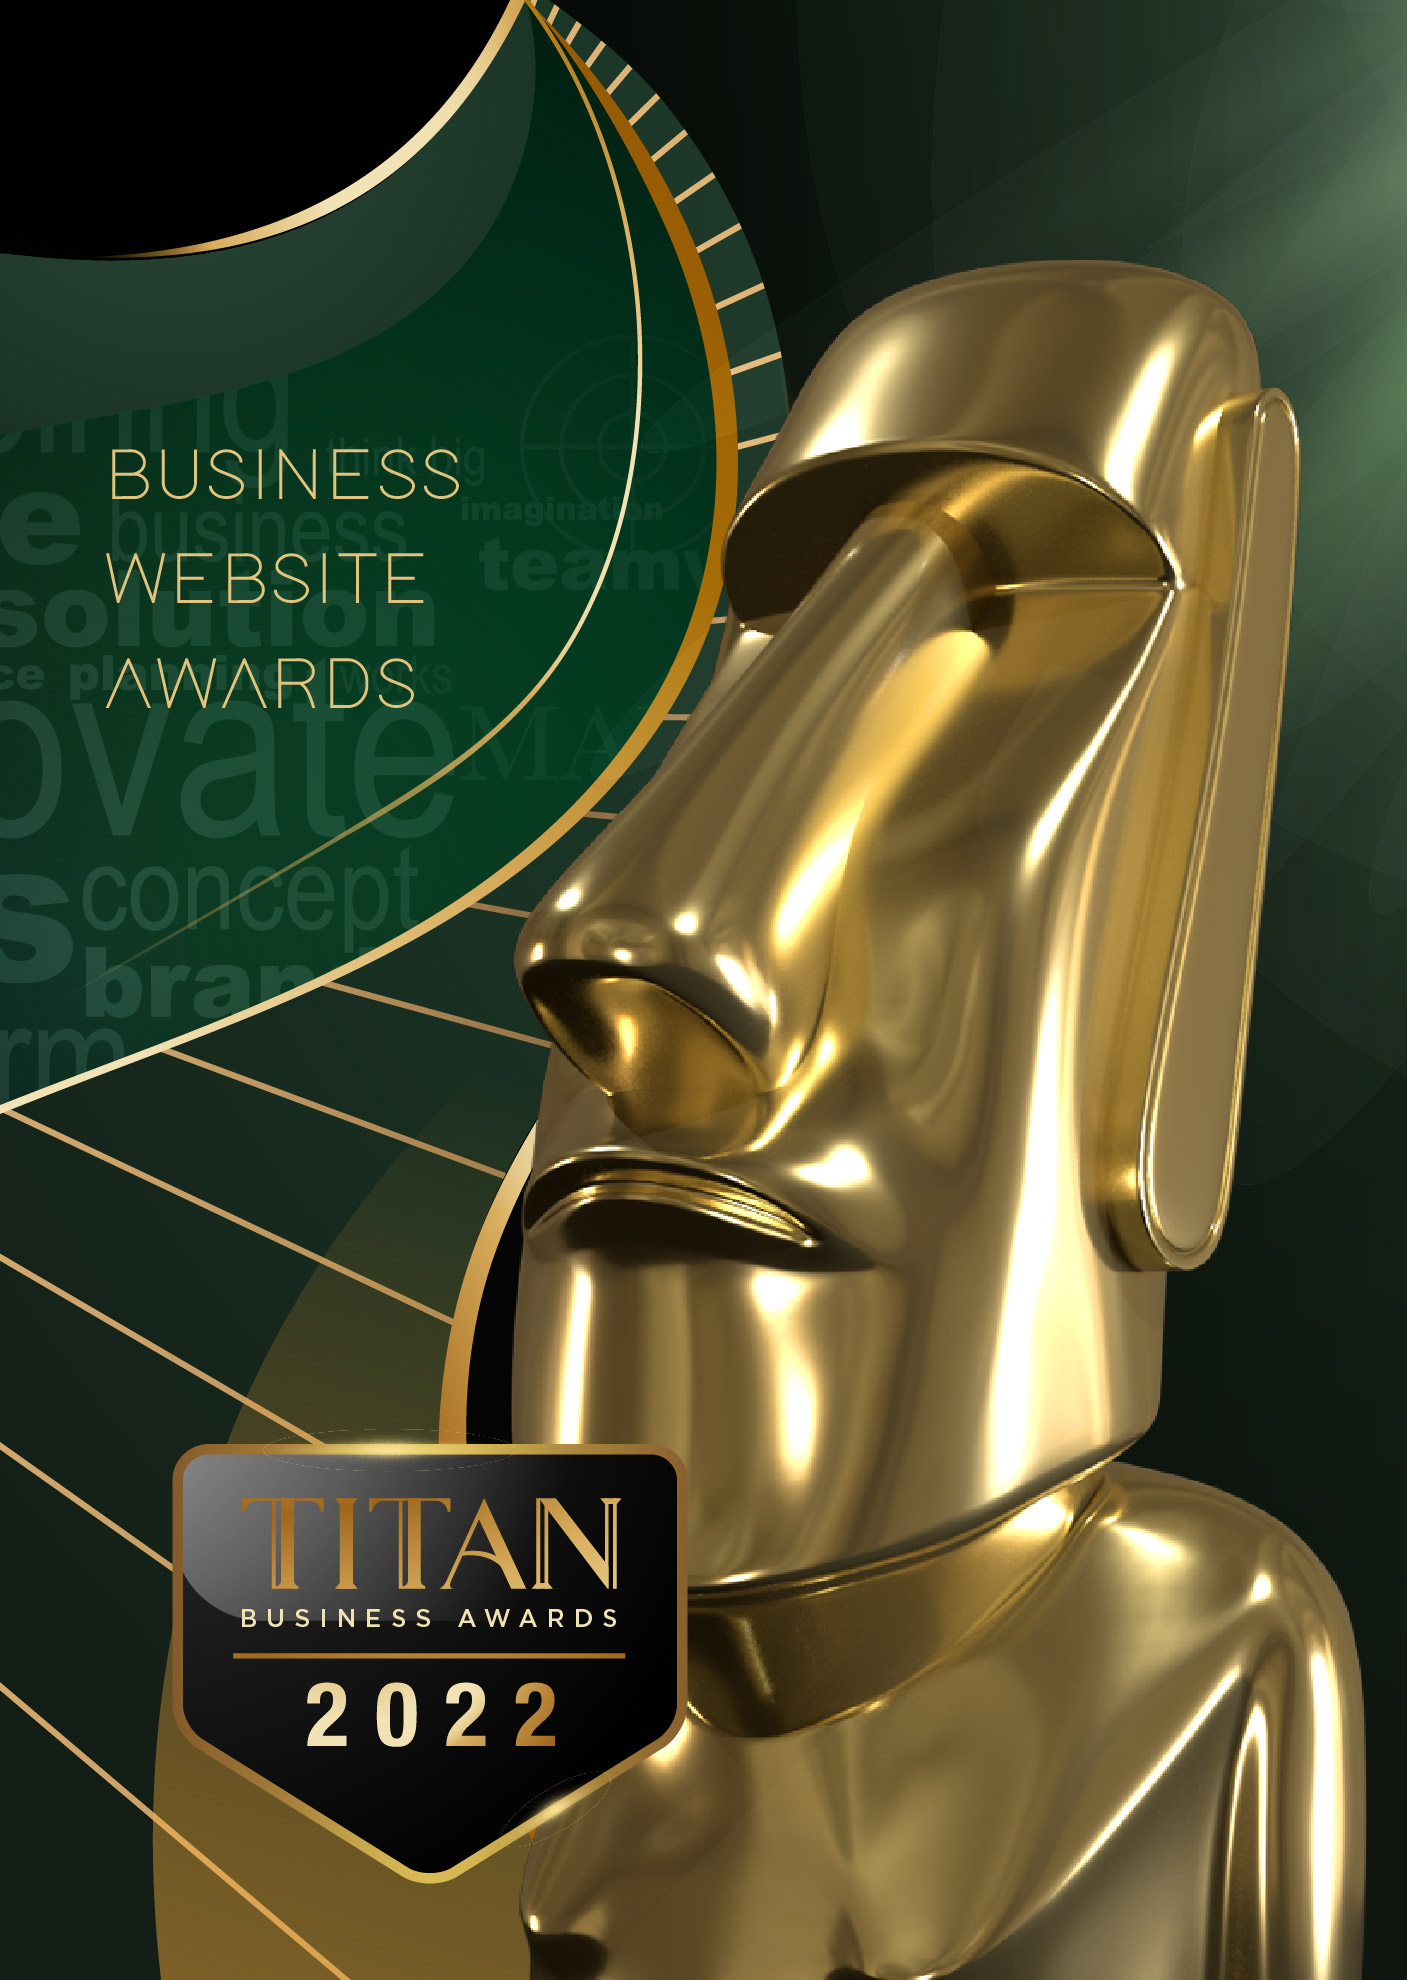 TITAN Website Awards | International Business Awards